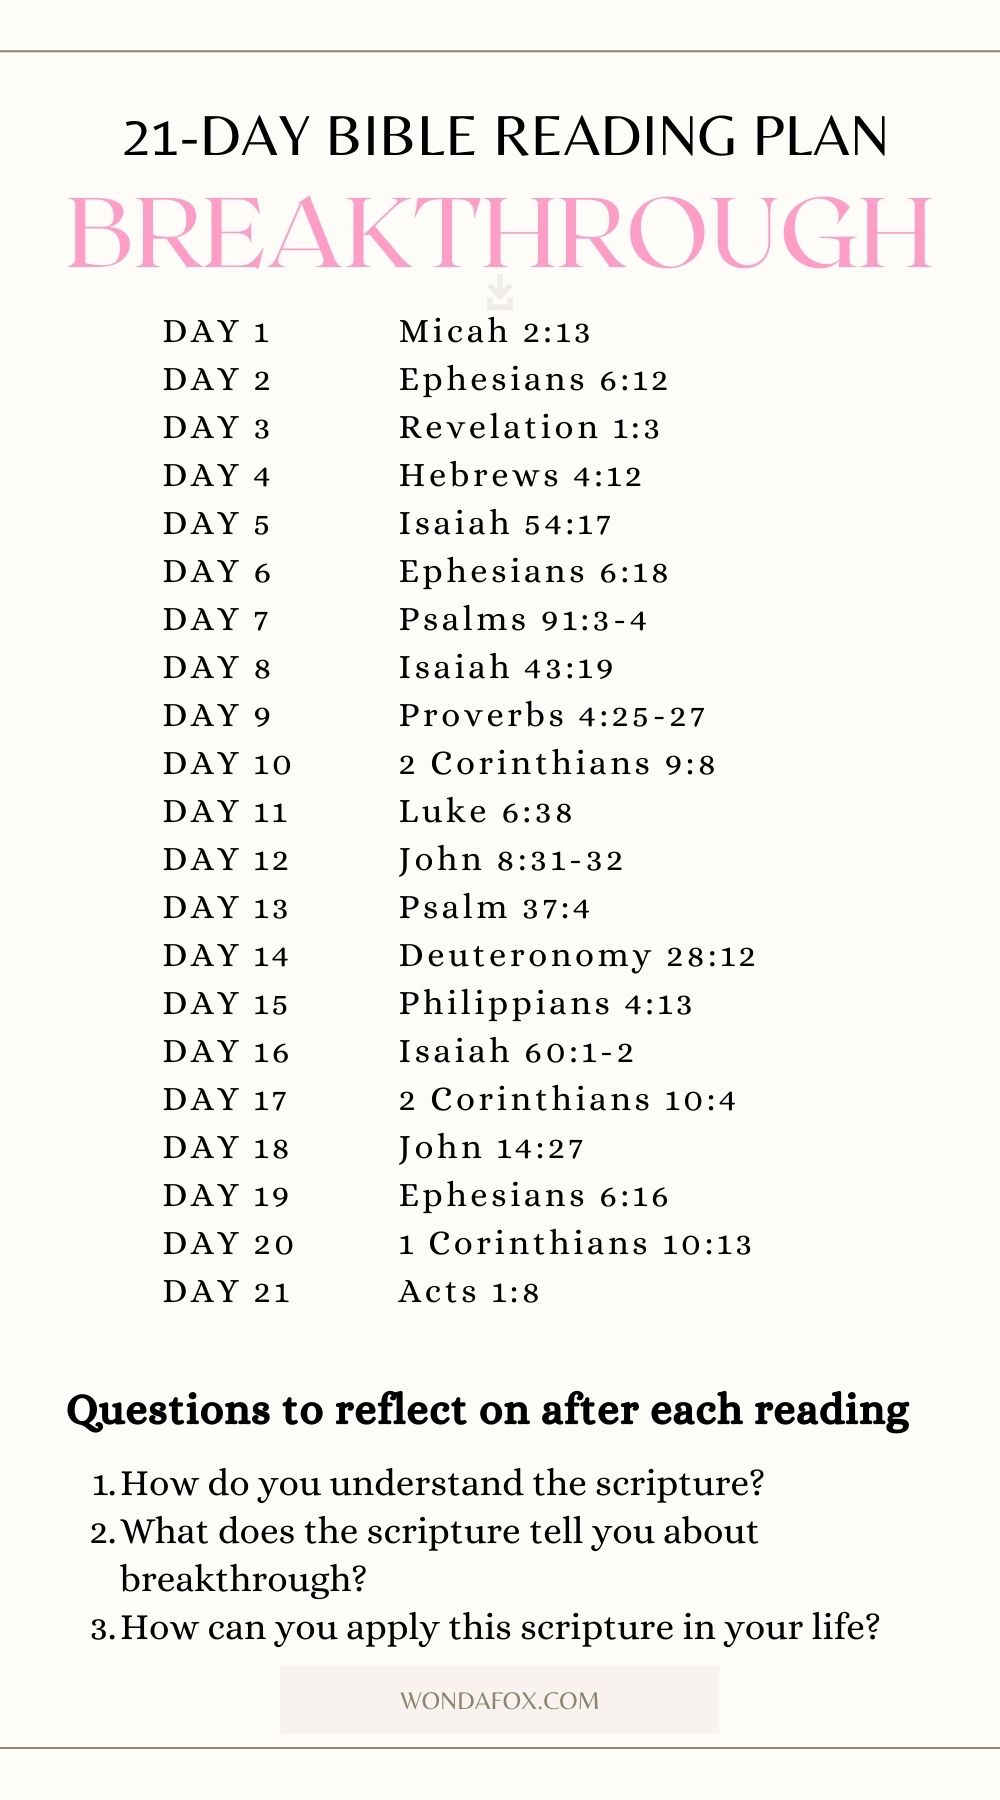 21-day breathrough bible reading plan